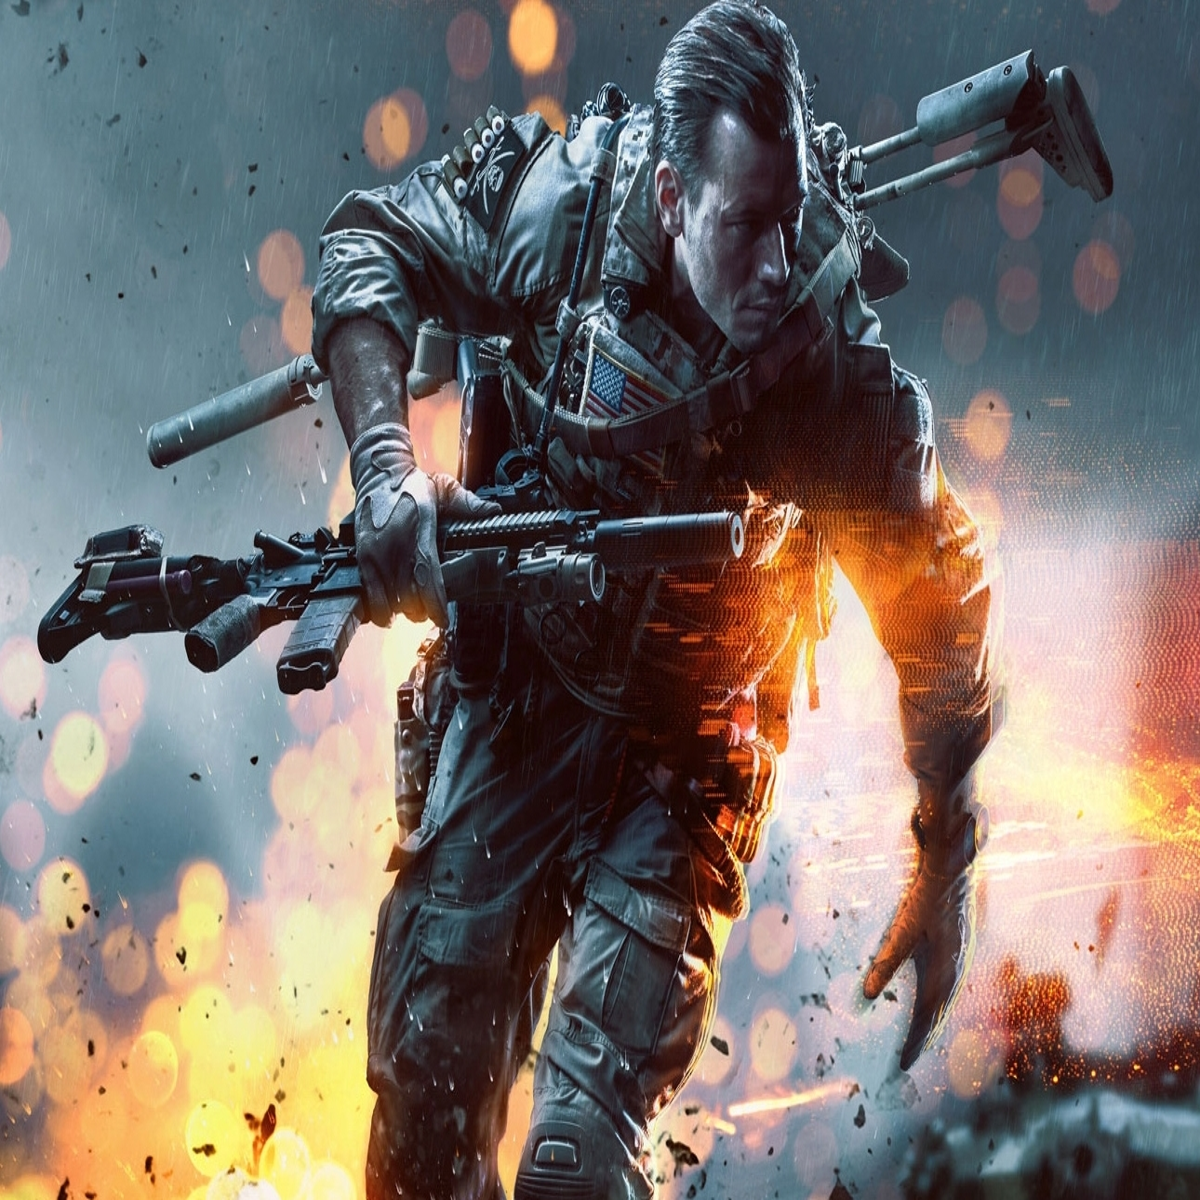 Battlefield 4: PlayStation 3 PSN Multiplayer Frame-Rate Tests